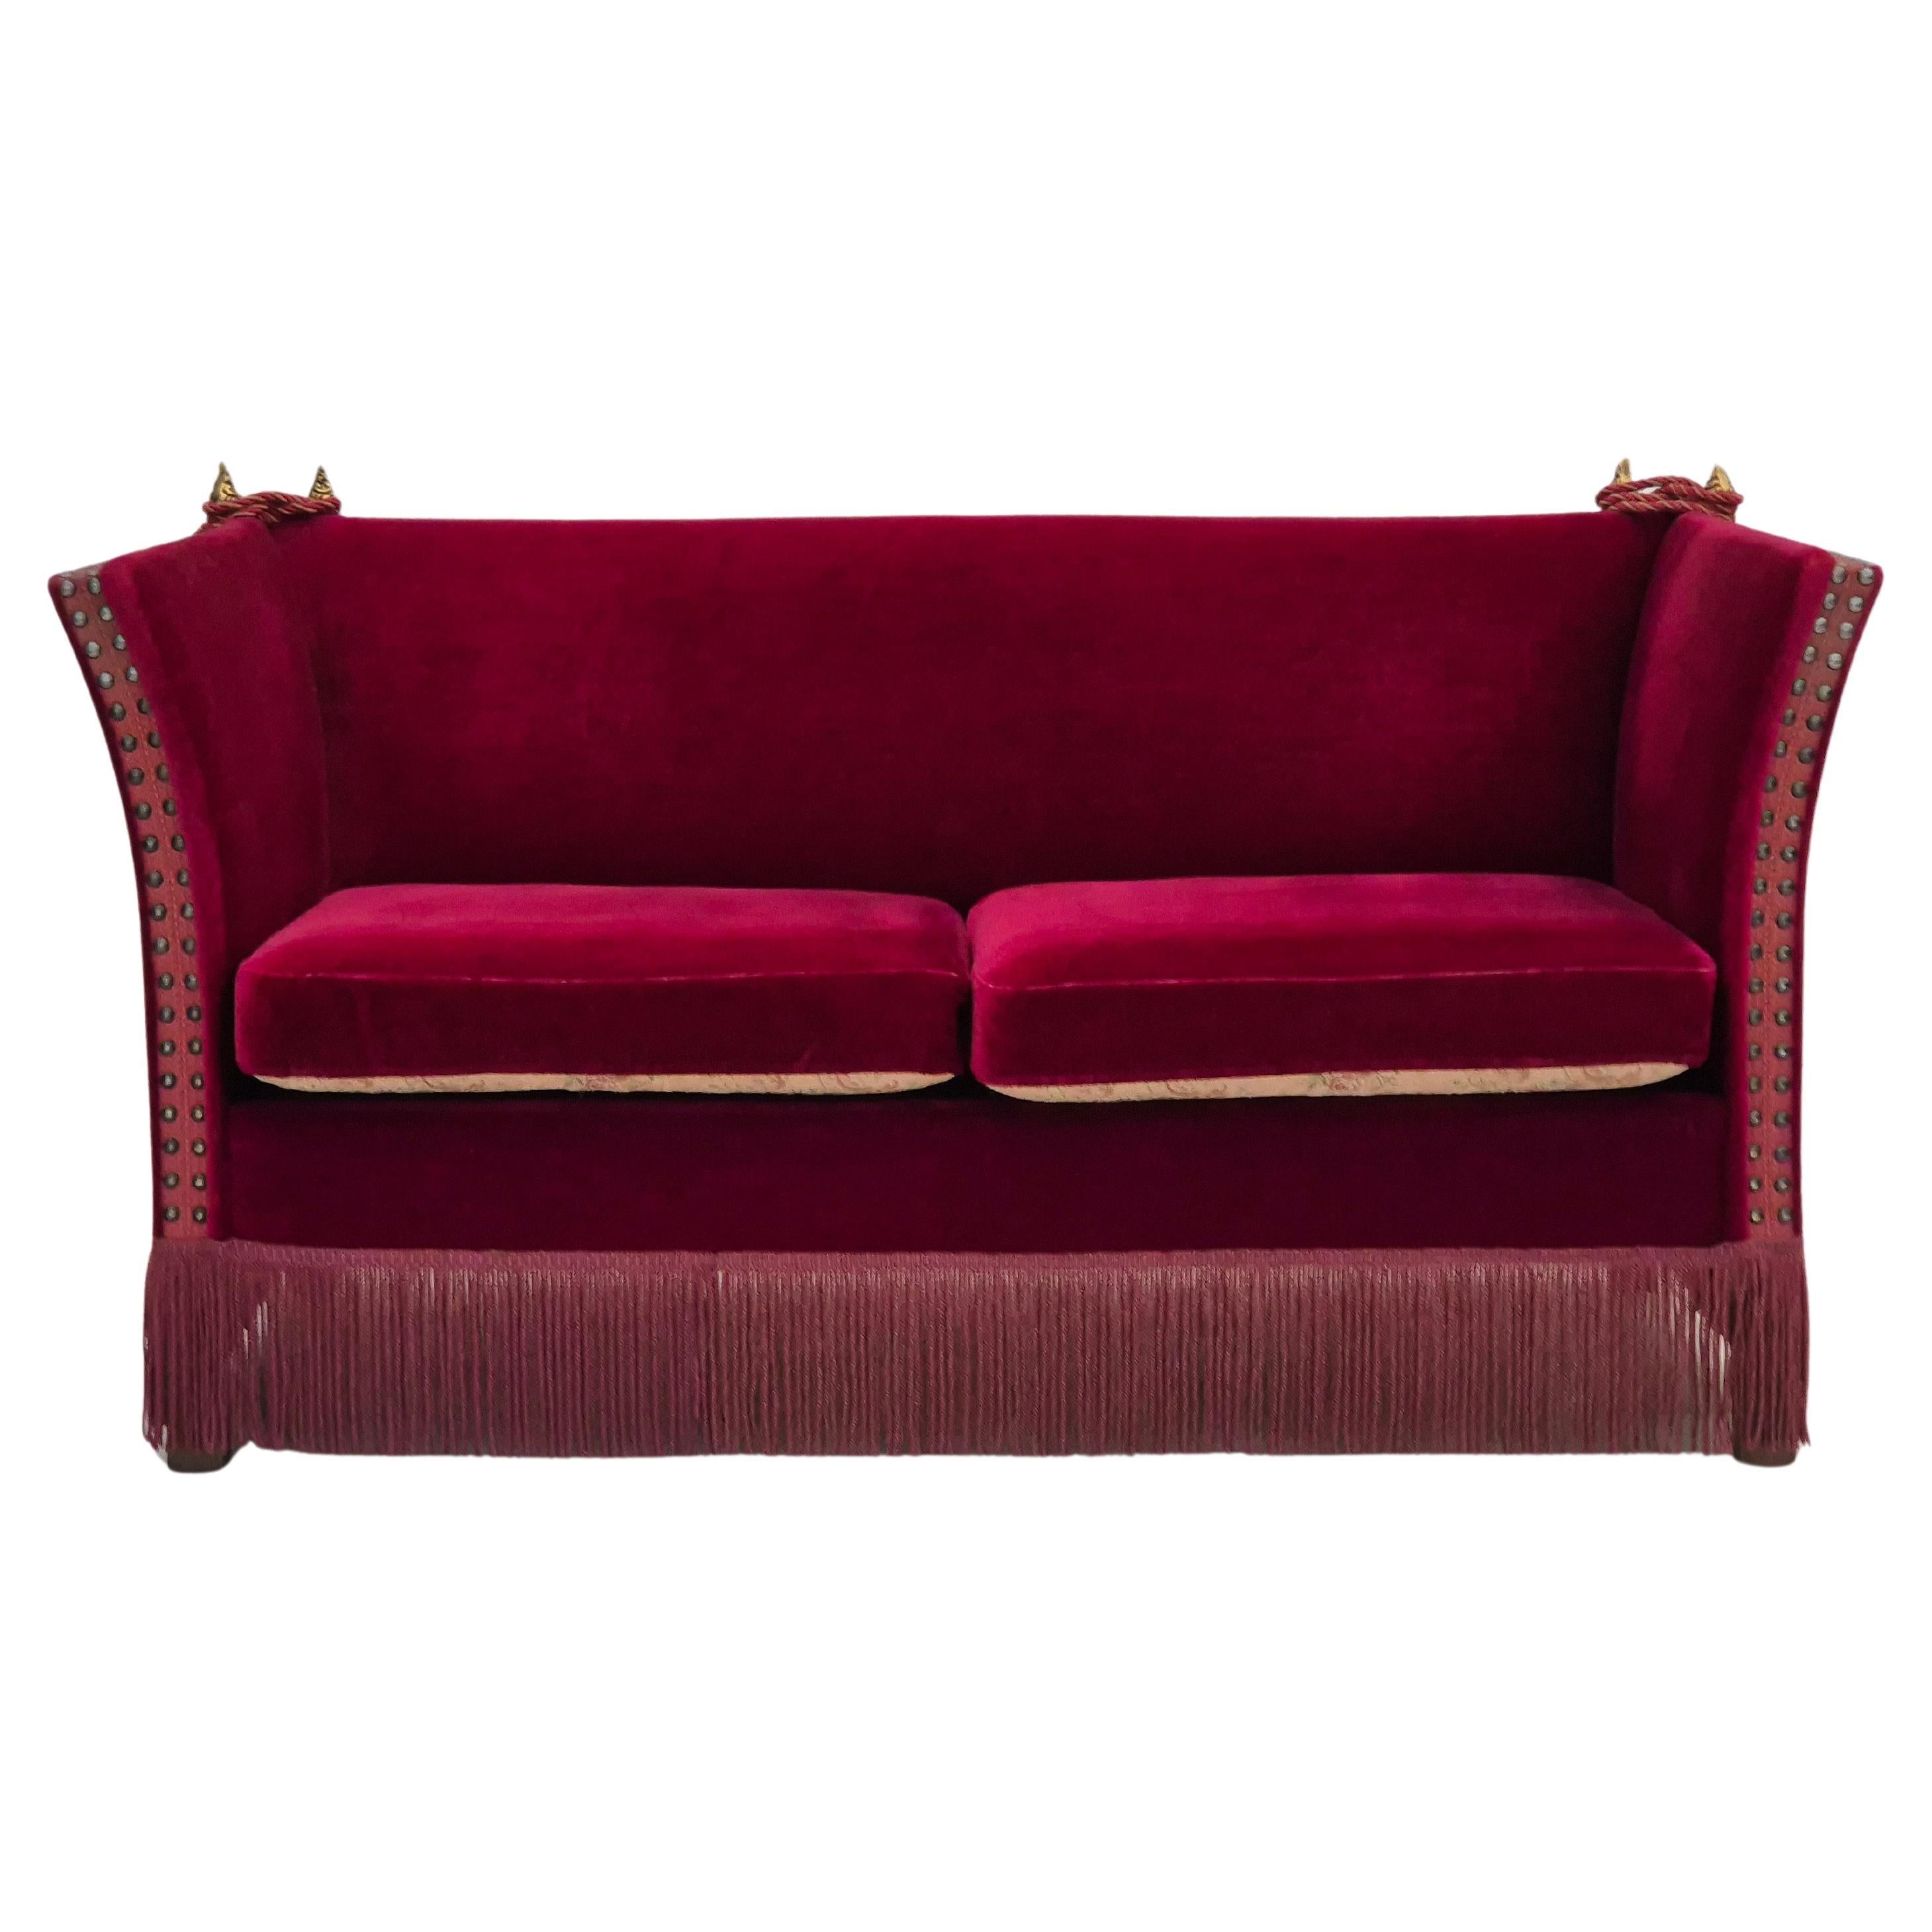 1960s, Danish "Spanish" sofa, original condition, furniture velour, ash wood.